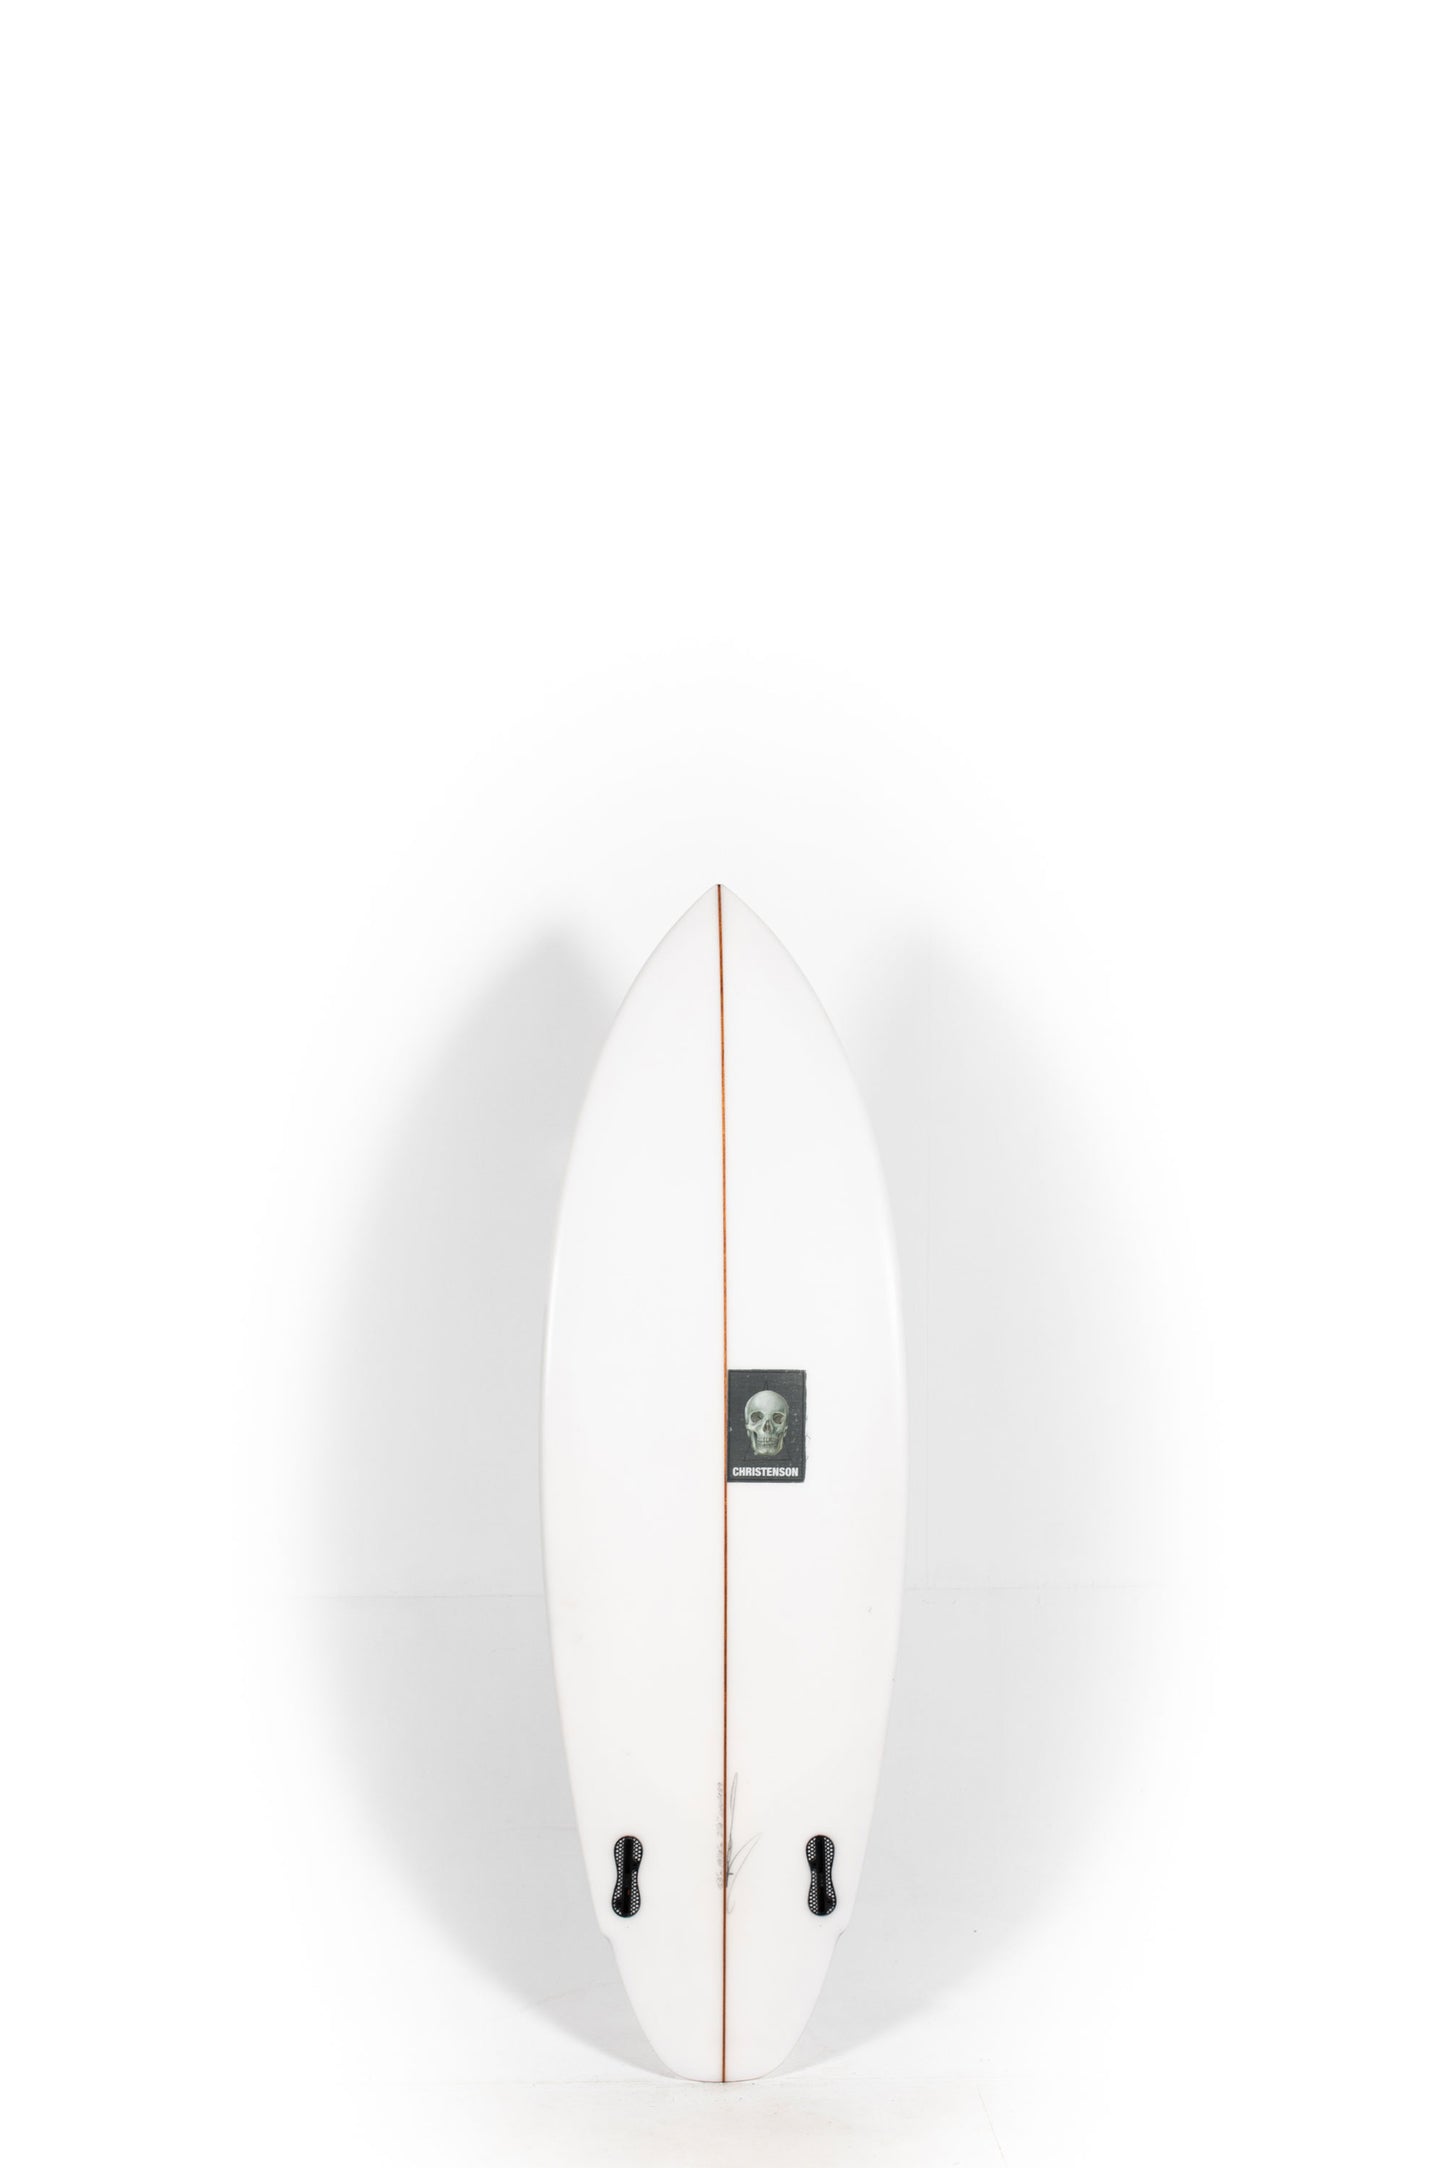 Pukas Surf Shop - 2ND HAND Pukas Surfboards - LANE SPLITTER by Chris Christenson - 5’3 x 19 1/4 x 2 1/4